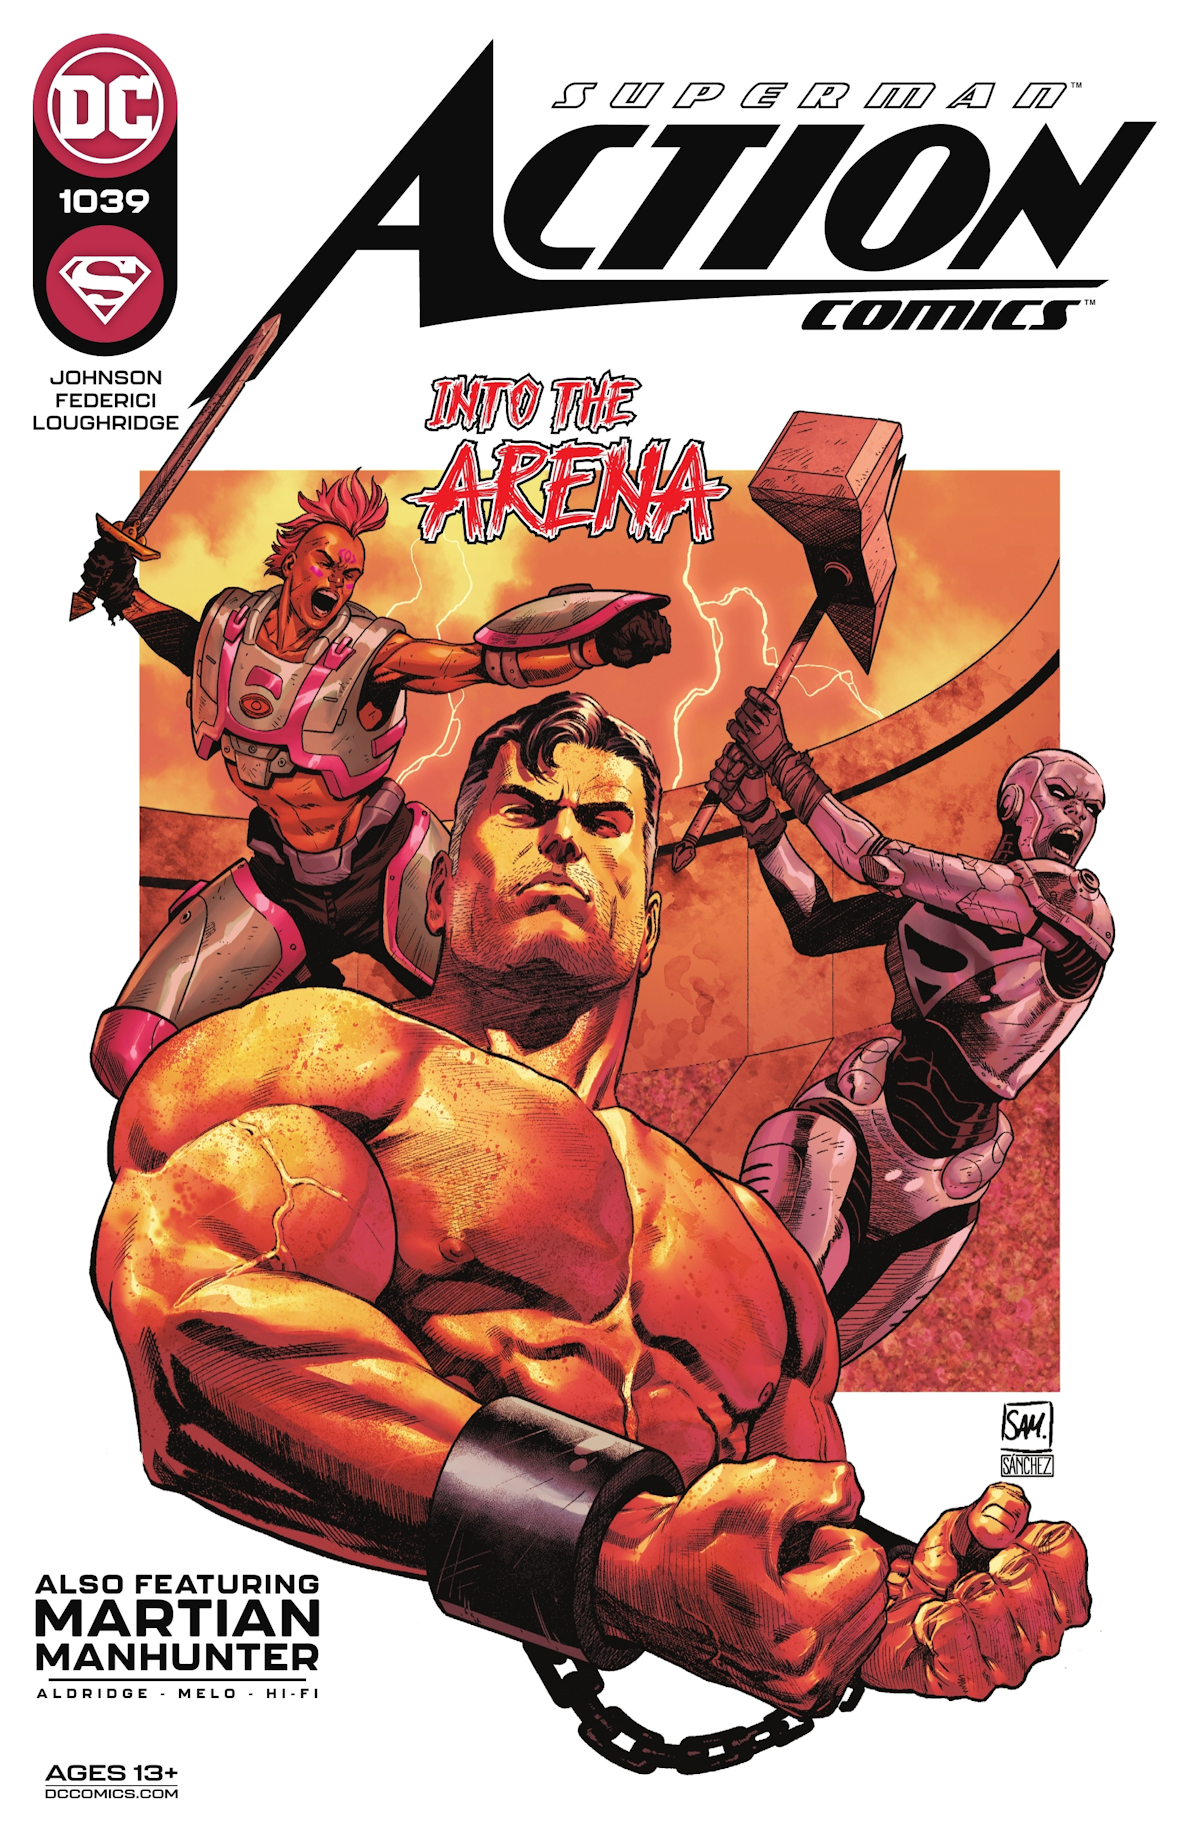 Action Comics 1039 (Cover A)